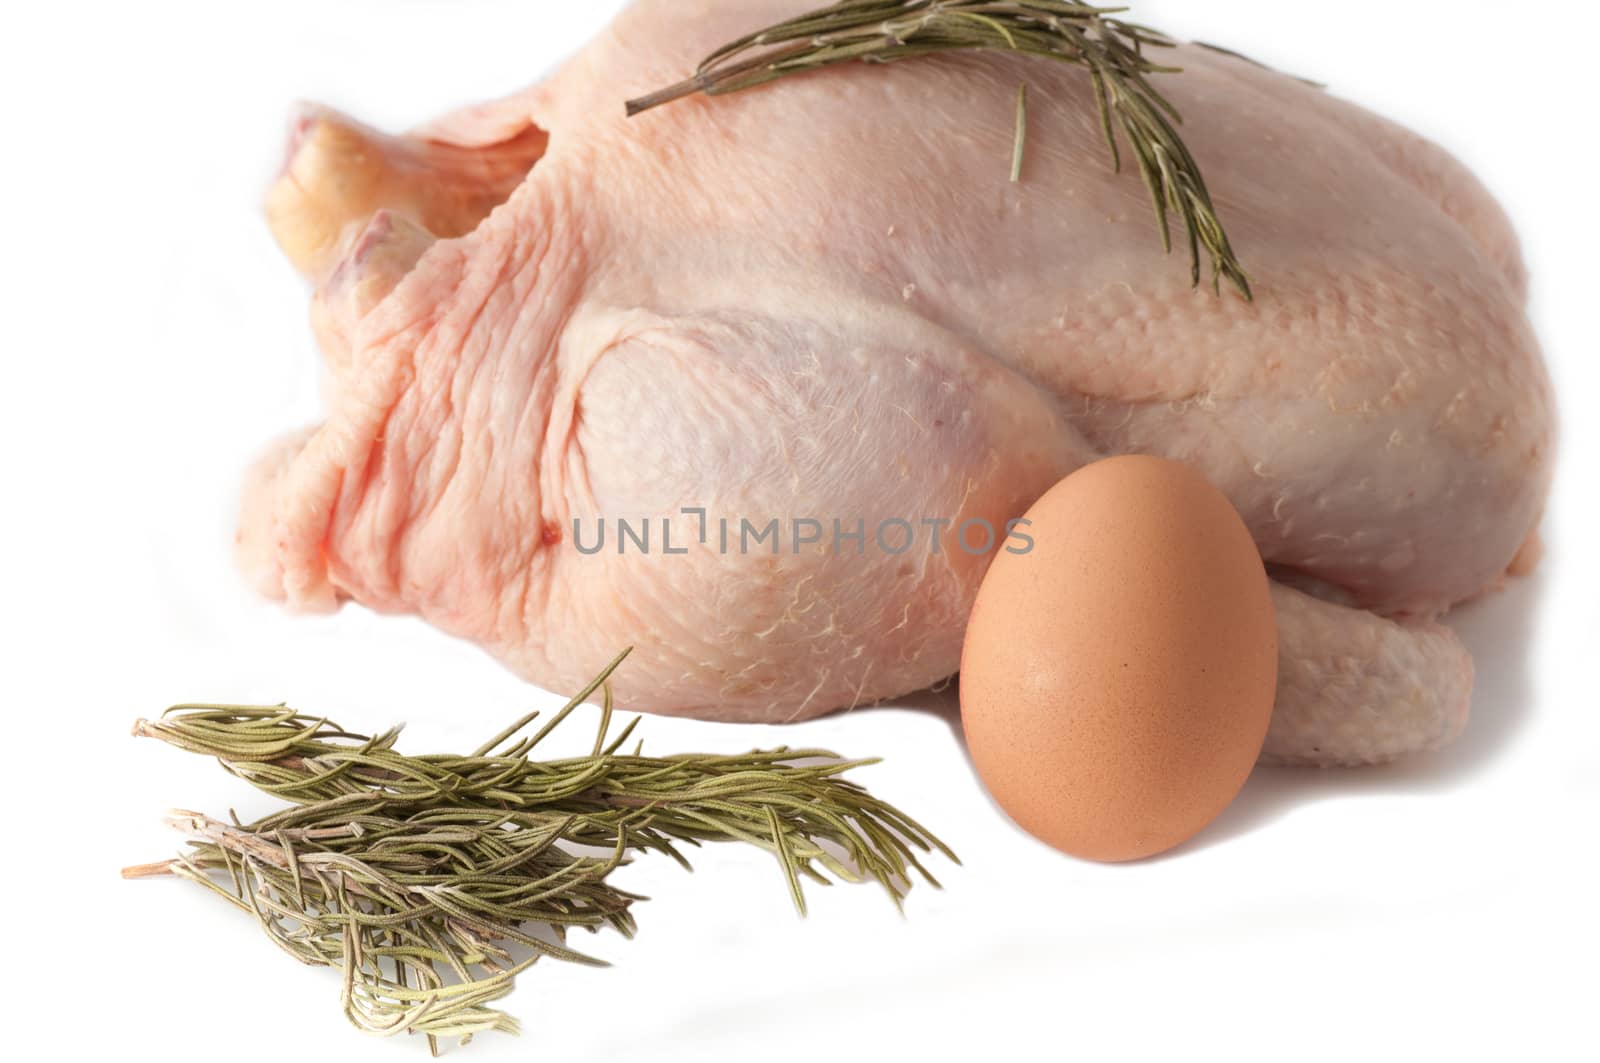 Crude Hen and crude egg  on a white background